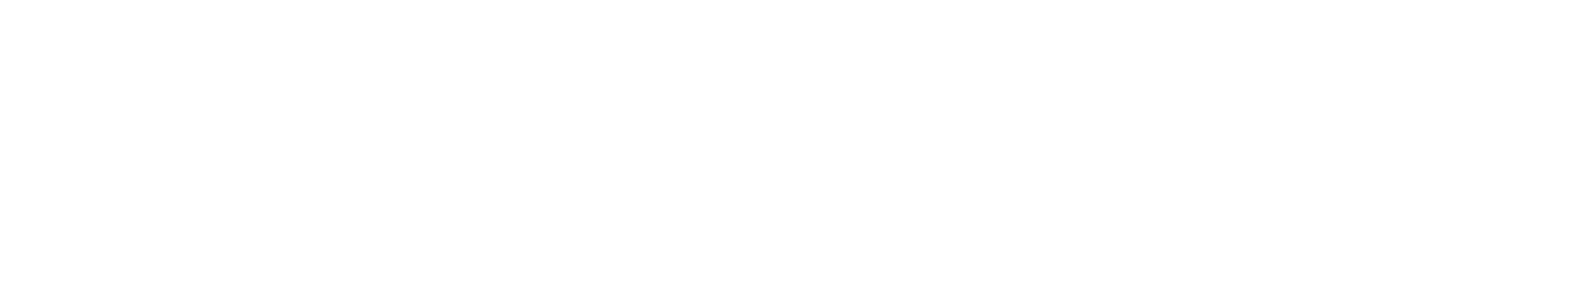 CopyForward Logo Full Name Dark Gray Serif-1